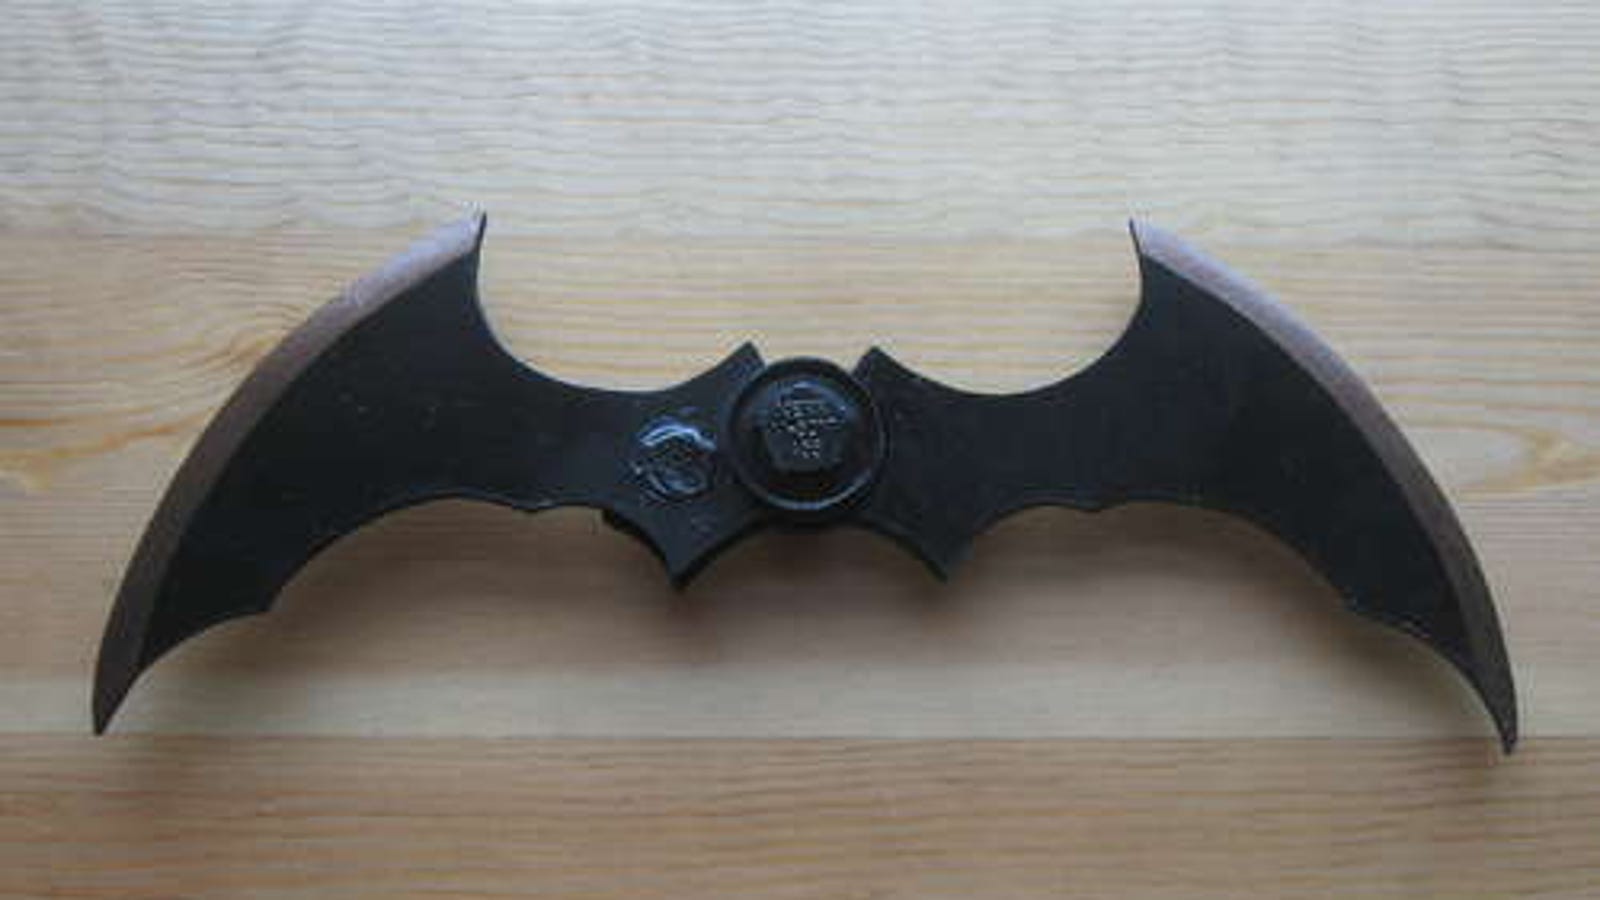 How to make your own Batarangs